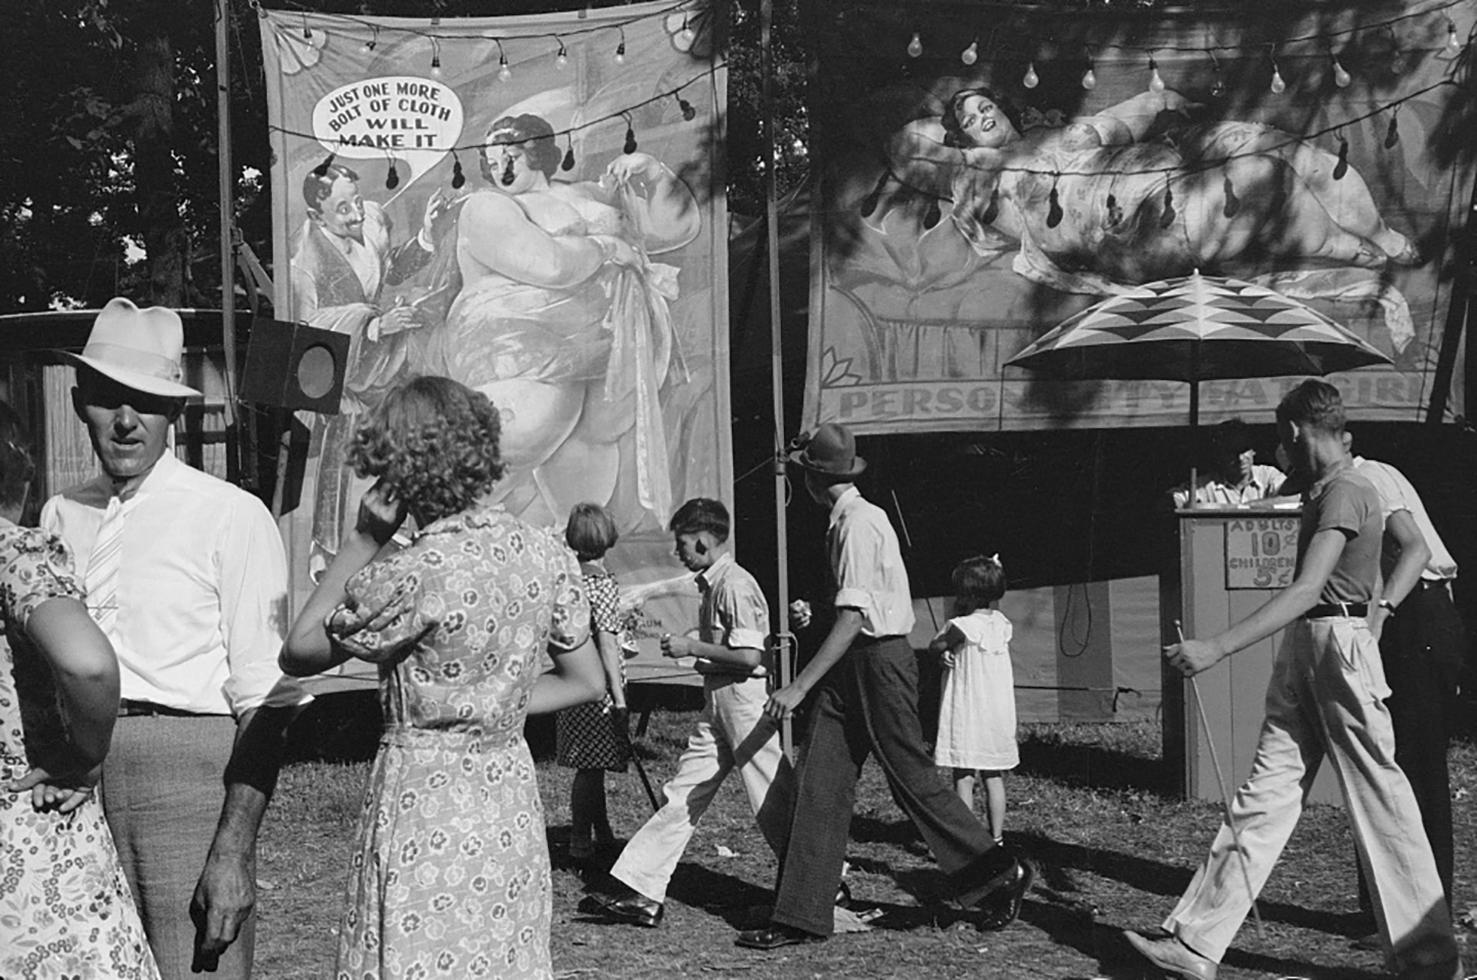 Ben Shahn Black and White Photograph - Sideshow, county fair, central Ohio